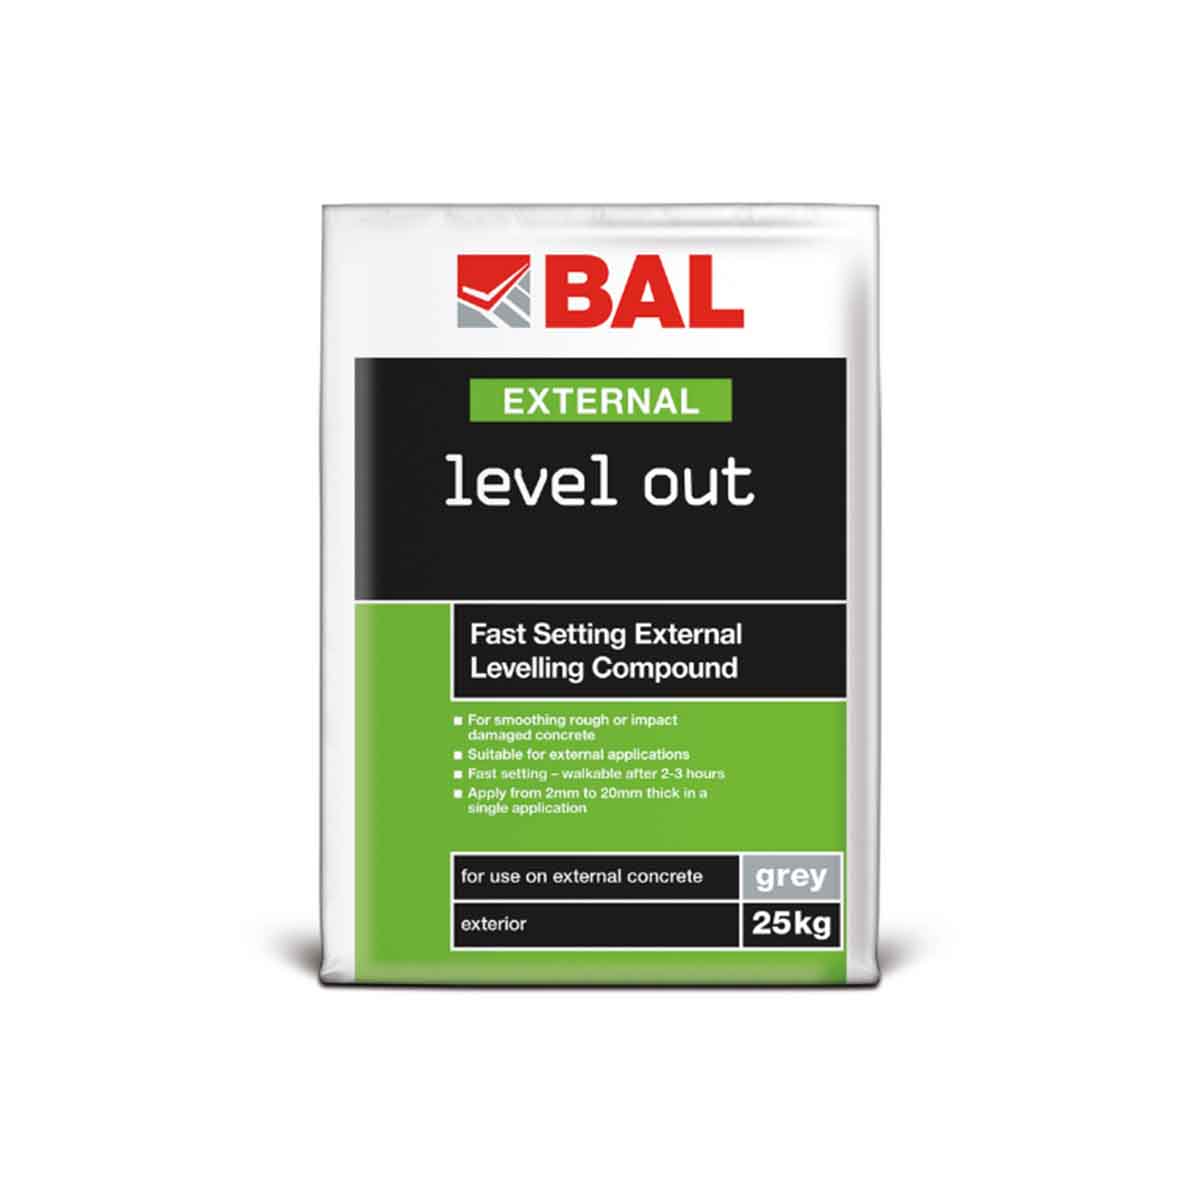 BAL External Level Out 25kg Grey